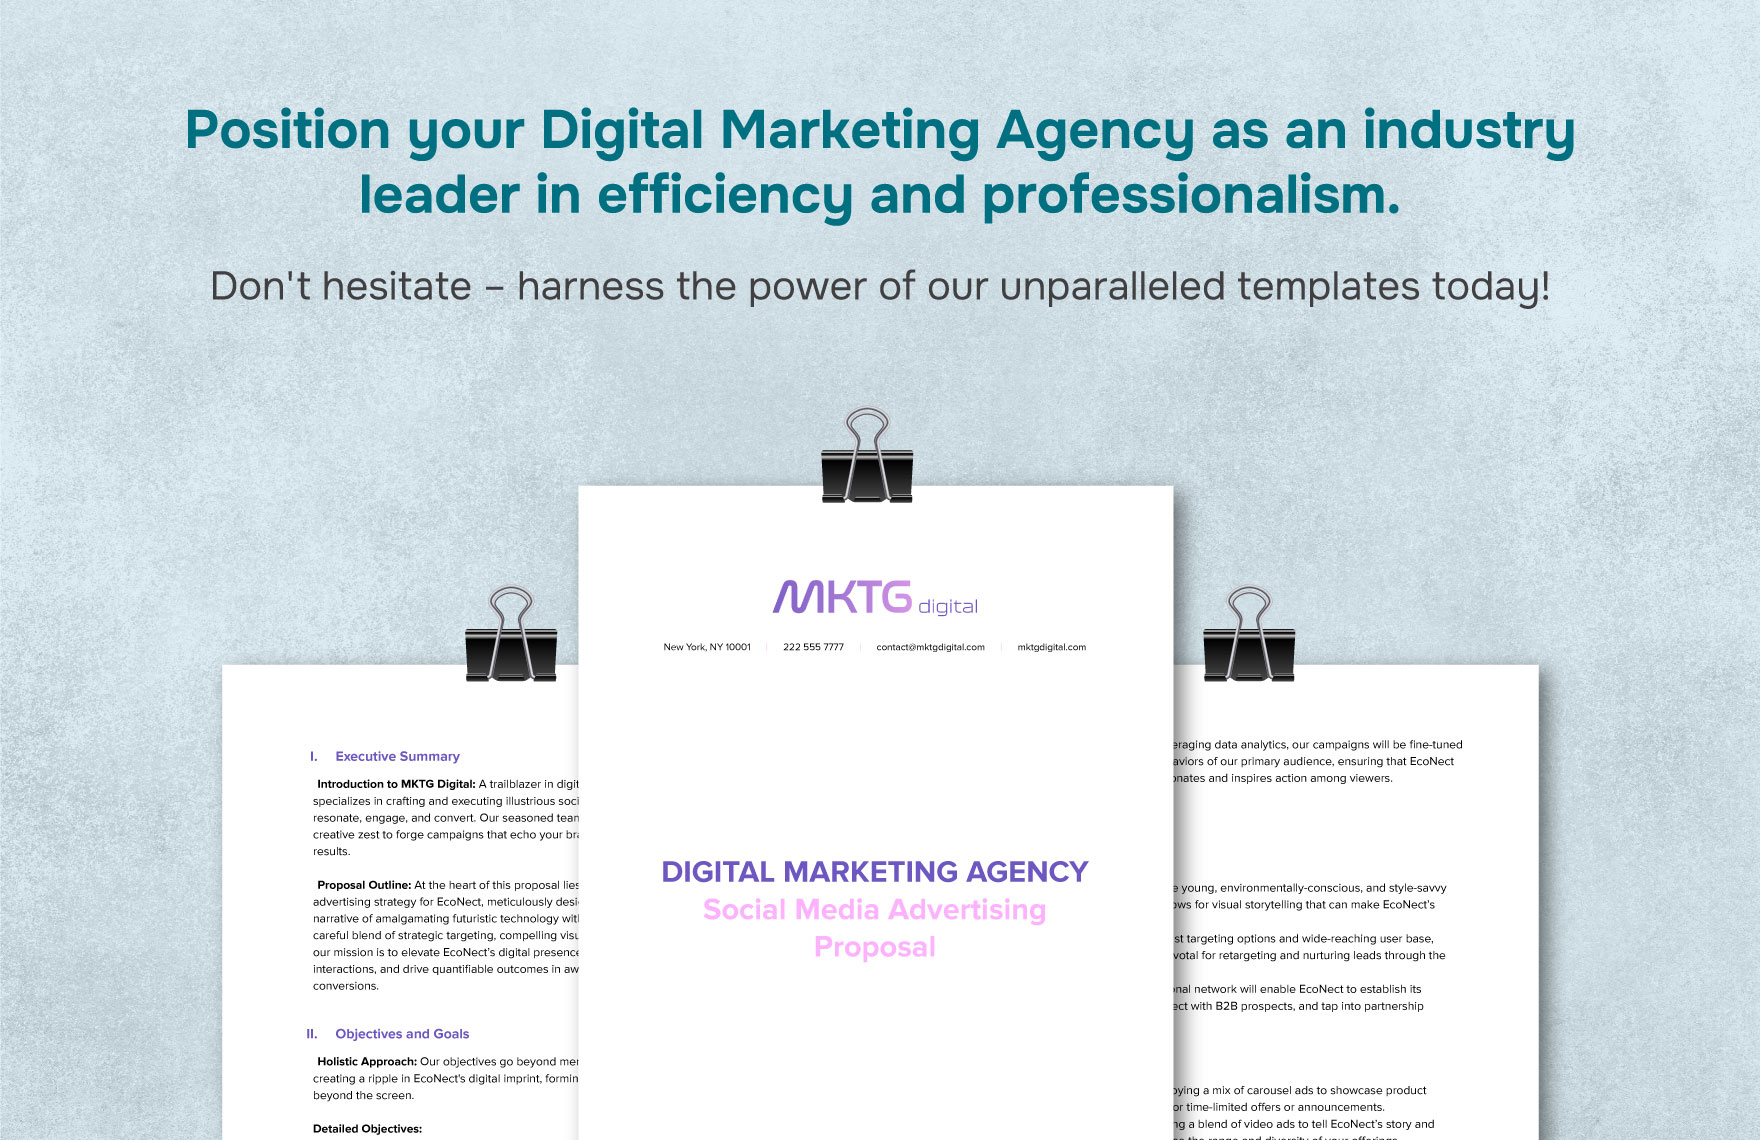 Digital Marketing Agency Social Media Advertising Proposal Template